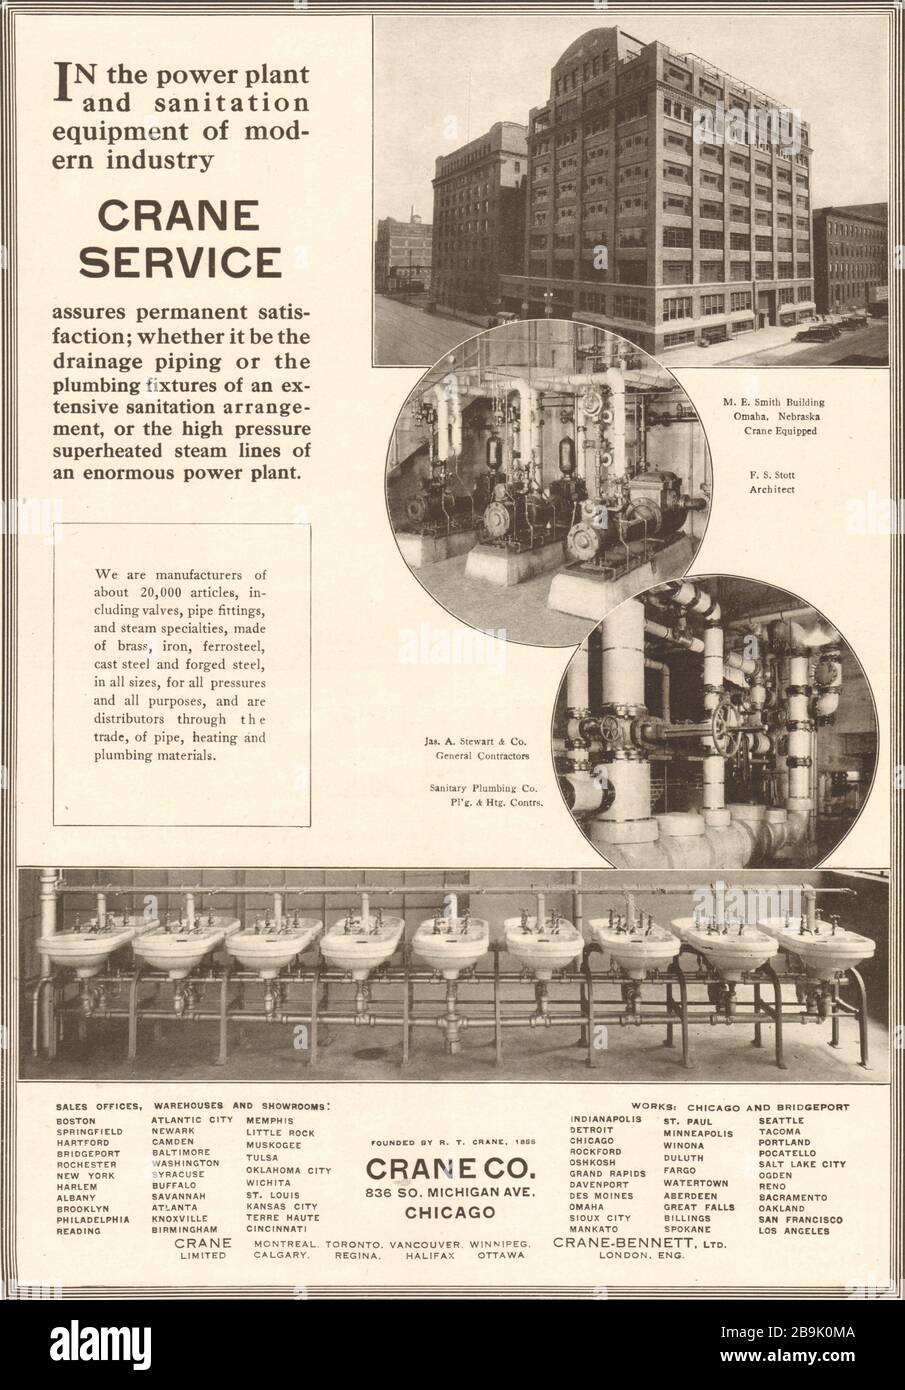 Crane service. M.E. Smith building, Omaha, Nebraska, F.S. Stott, Architect. Crane Co., 836 So. Michigan Ave, Chicago (1922) Stock Photo